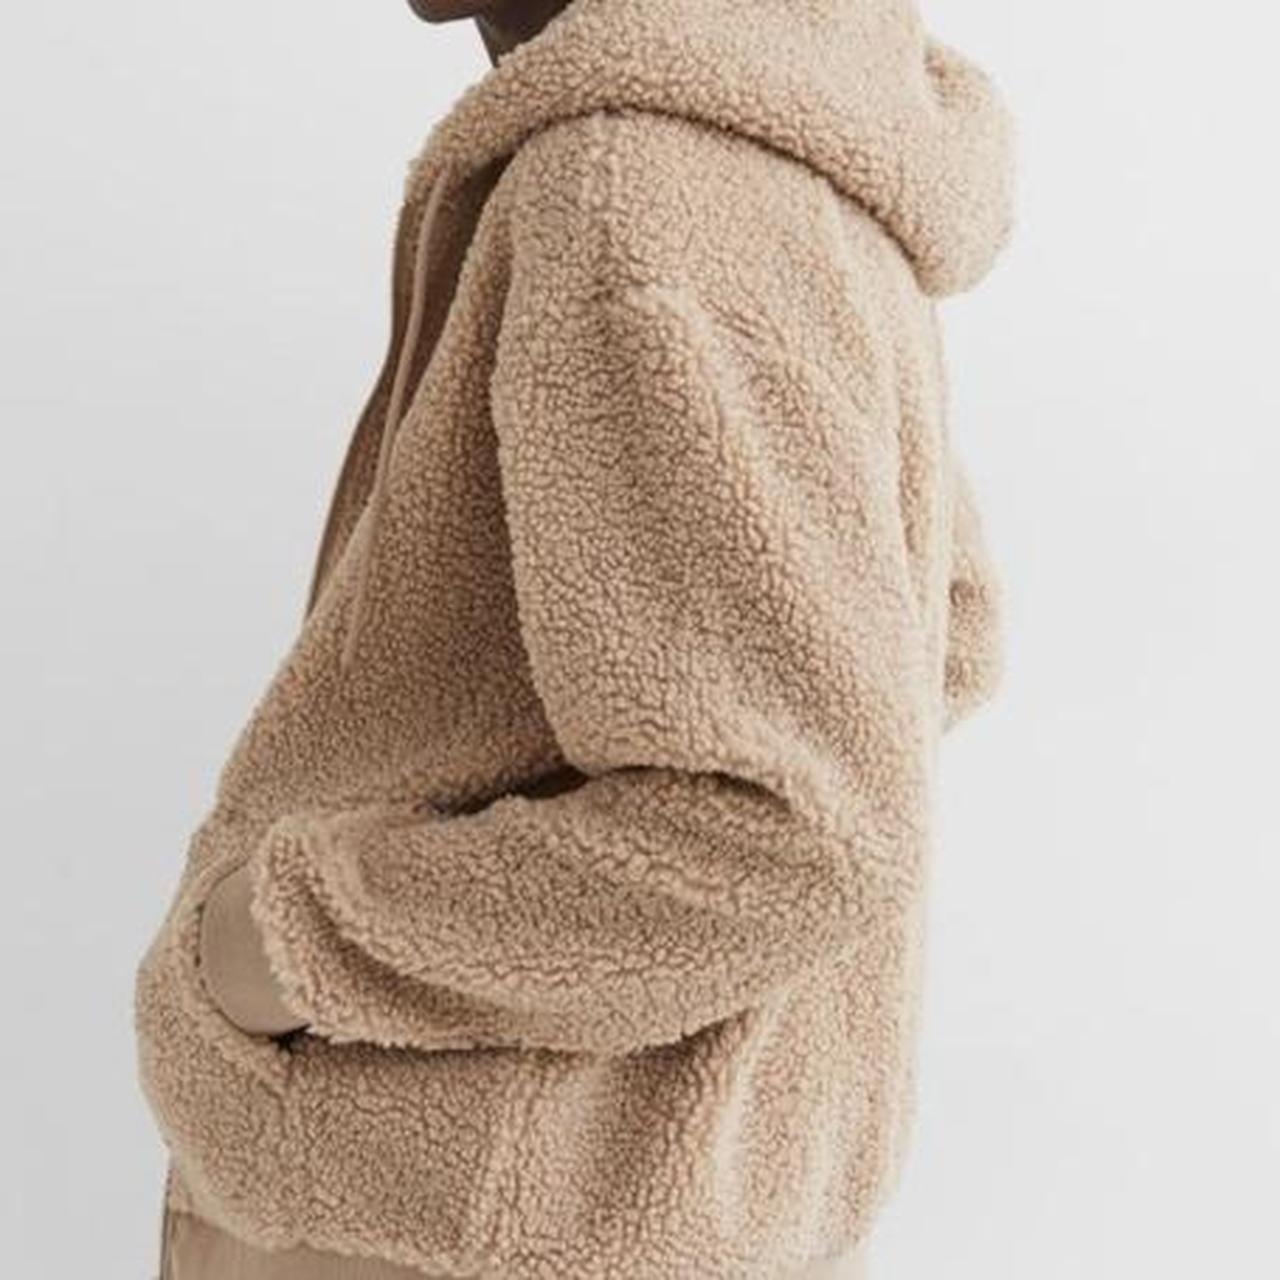 hm lightweight teddy bear jacket size medium no - Depop